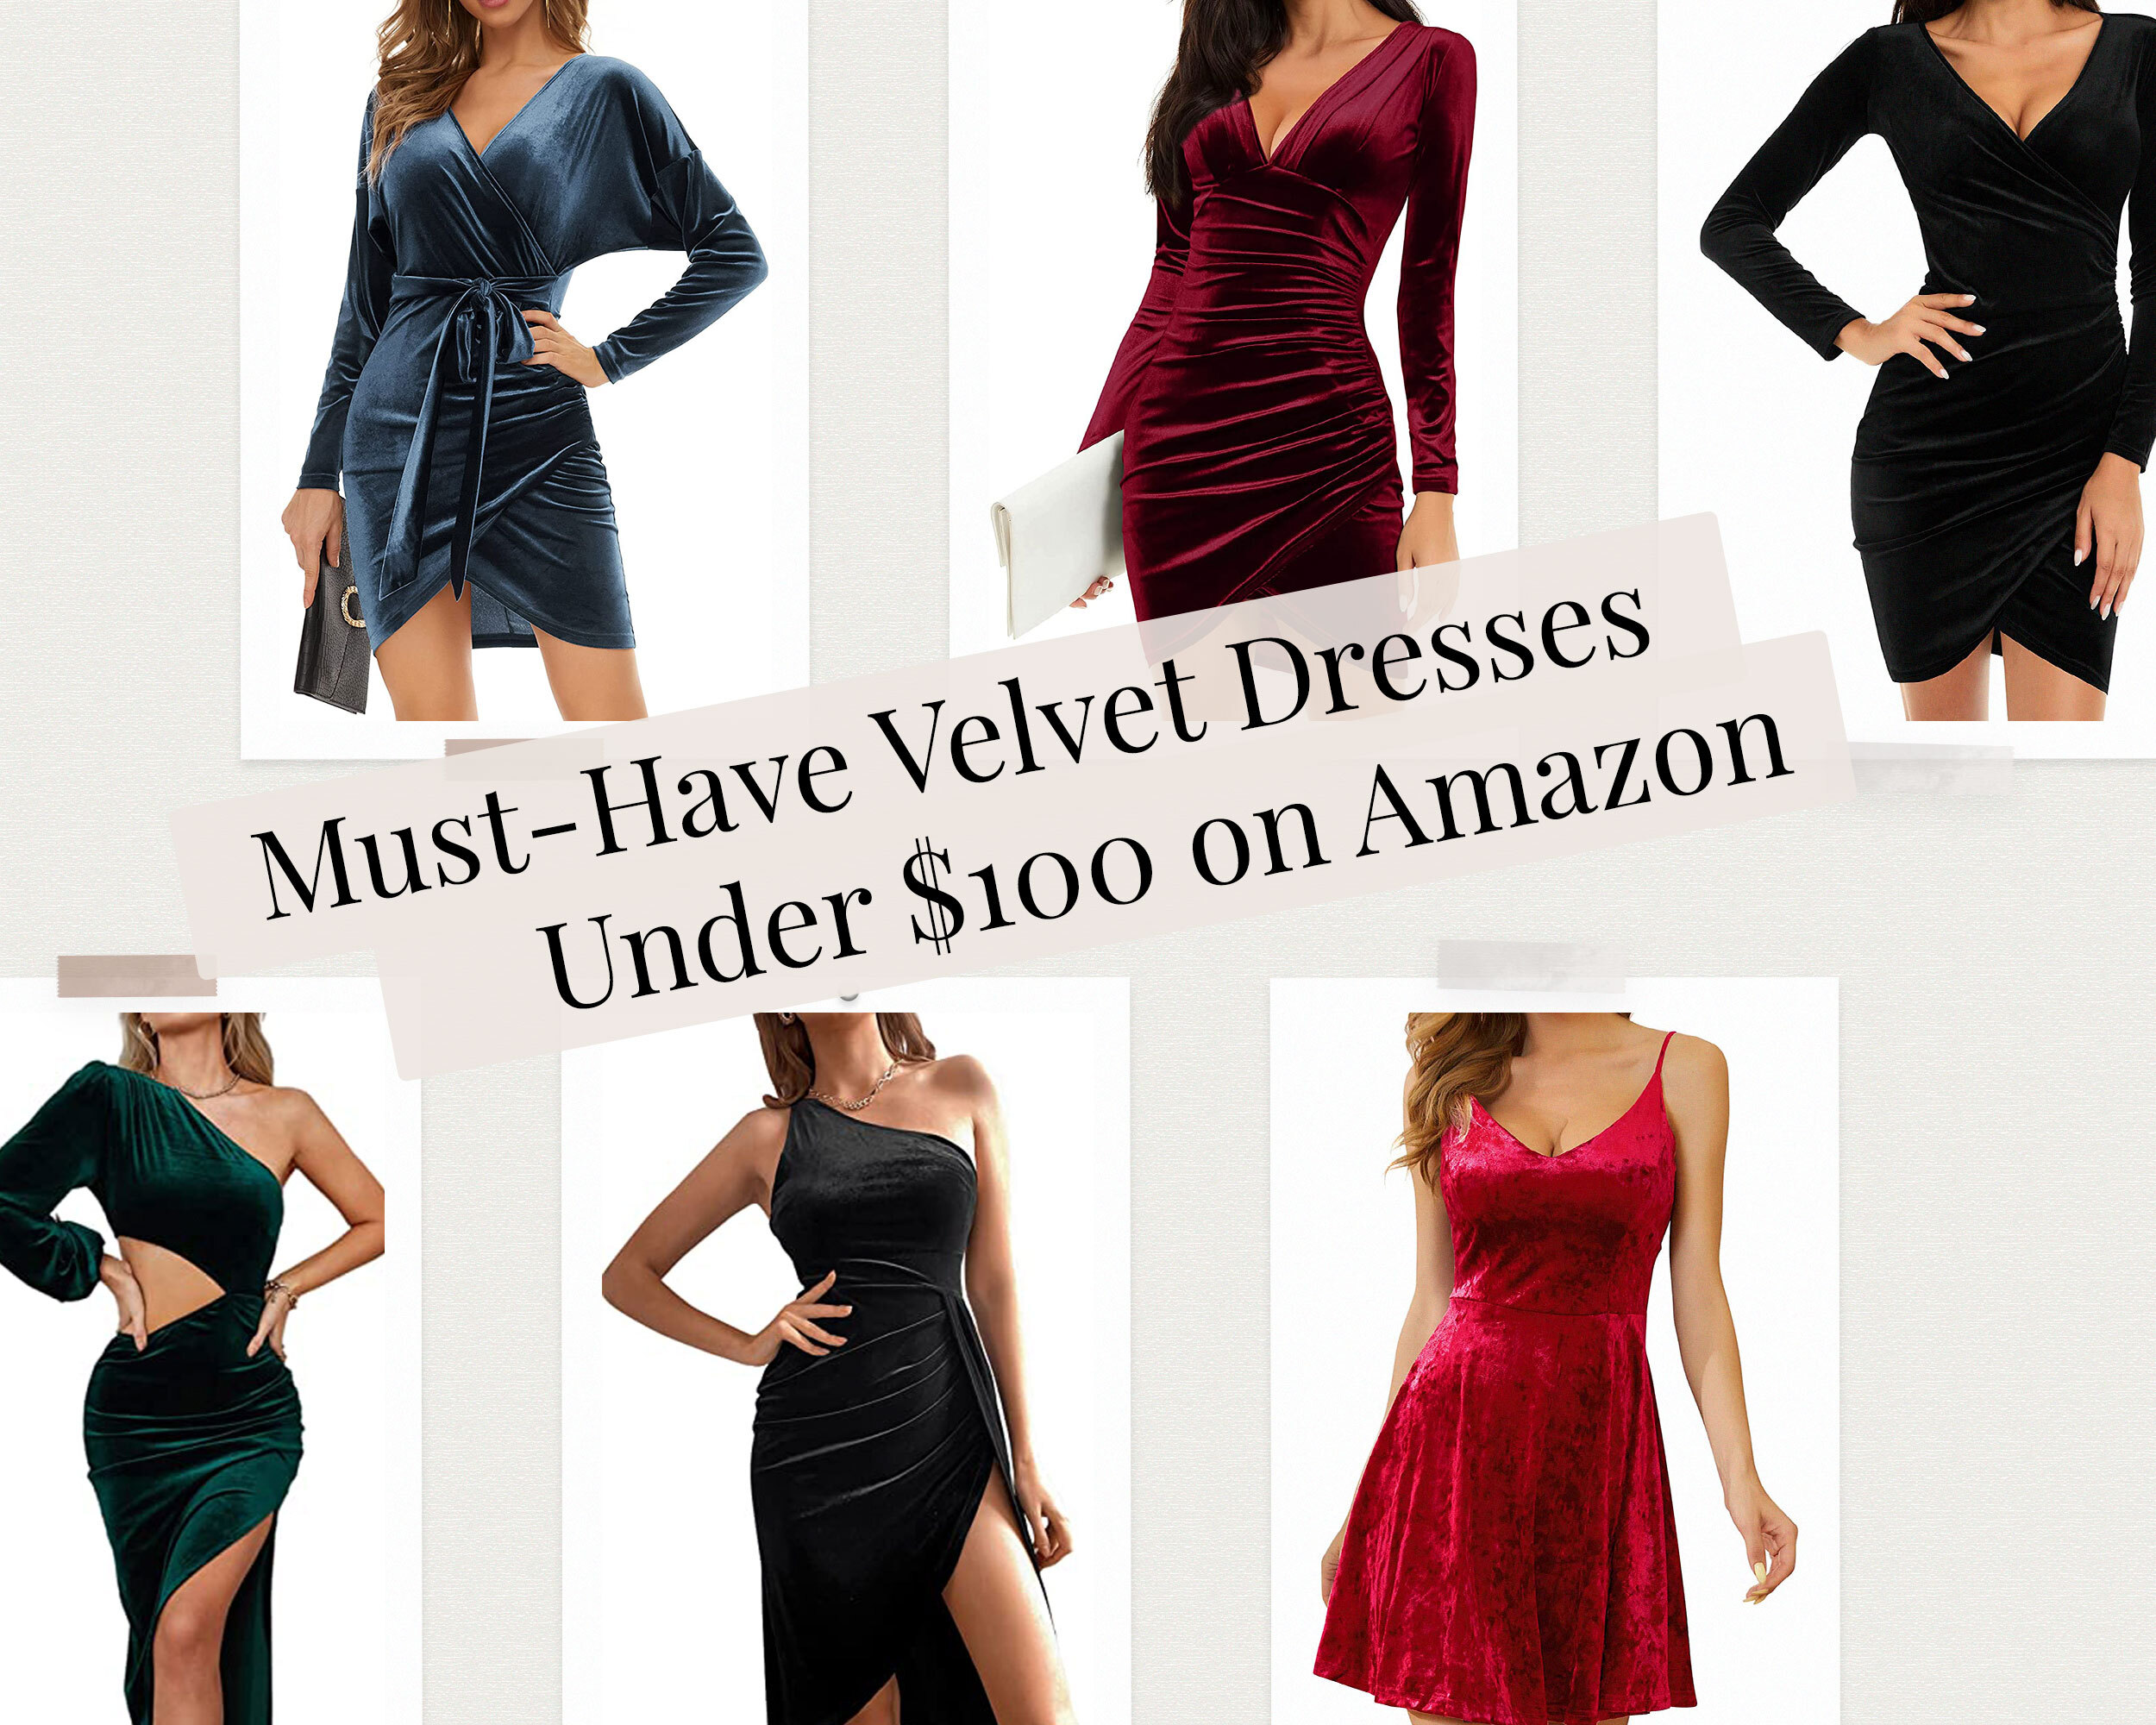 Must-Have Velvet Dresses Under $100 on Amazon